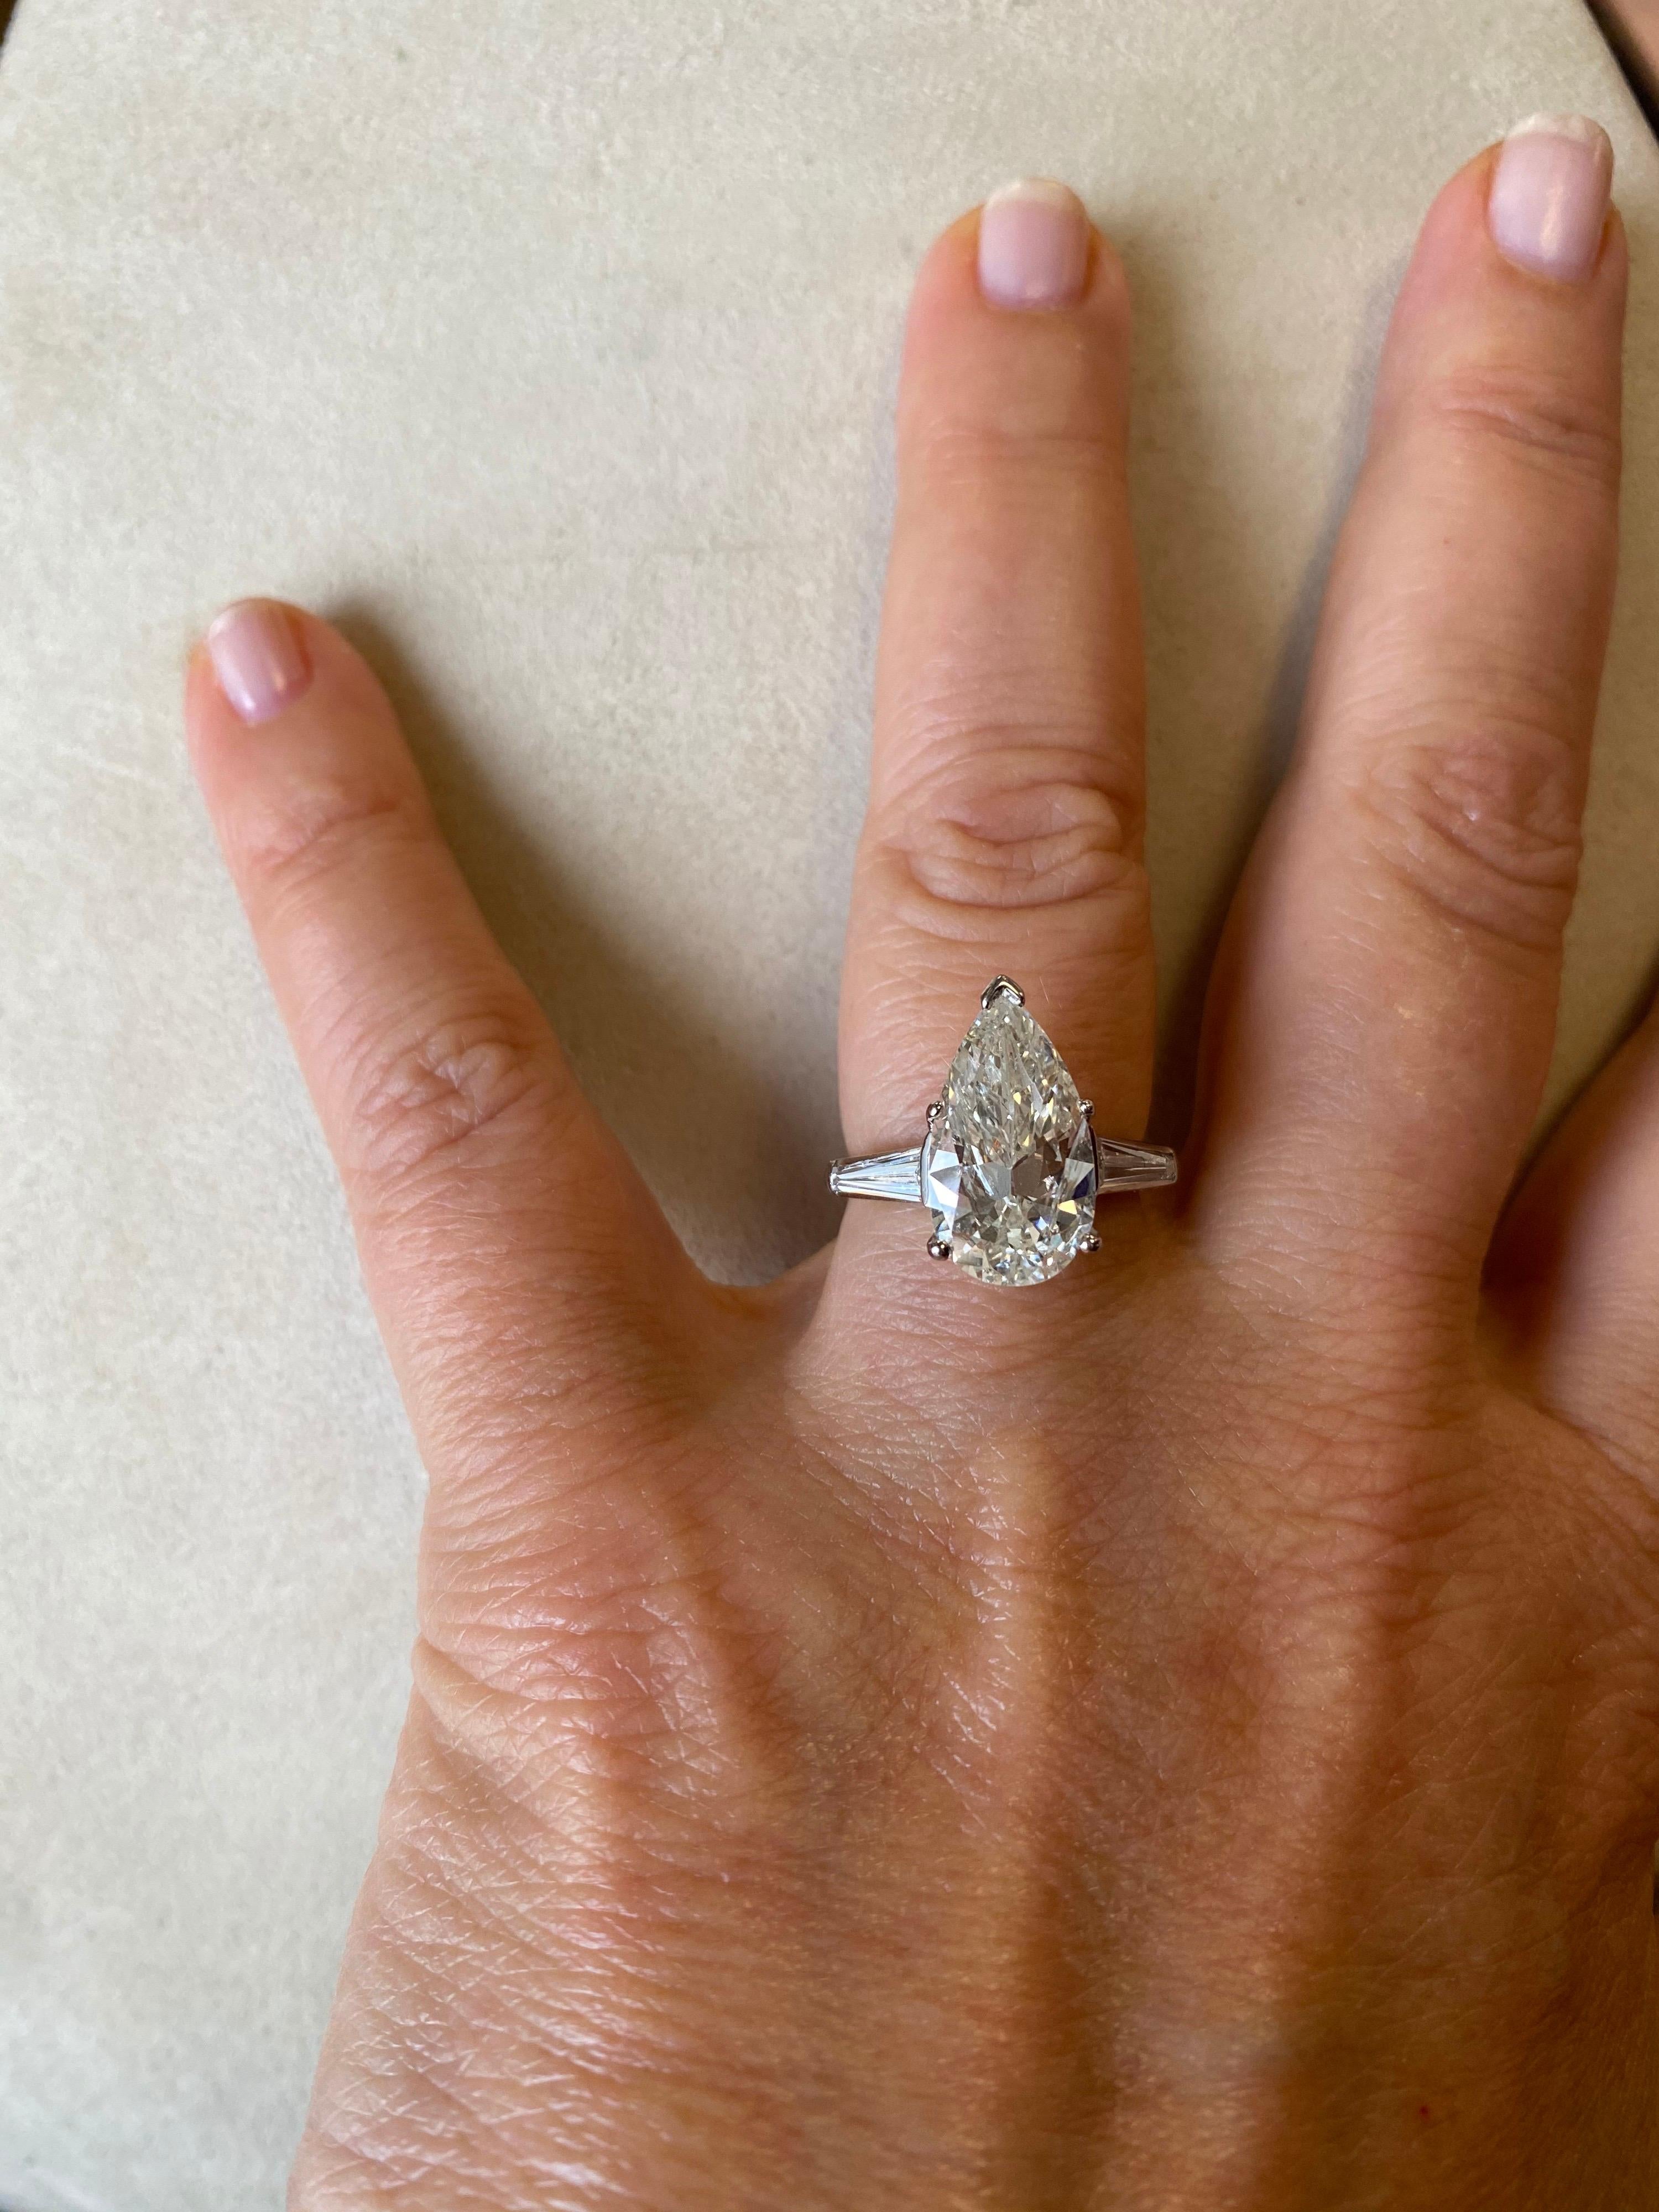 2 carat ring on size 6 finger